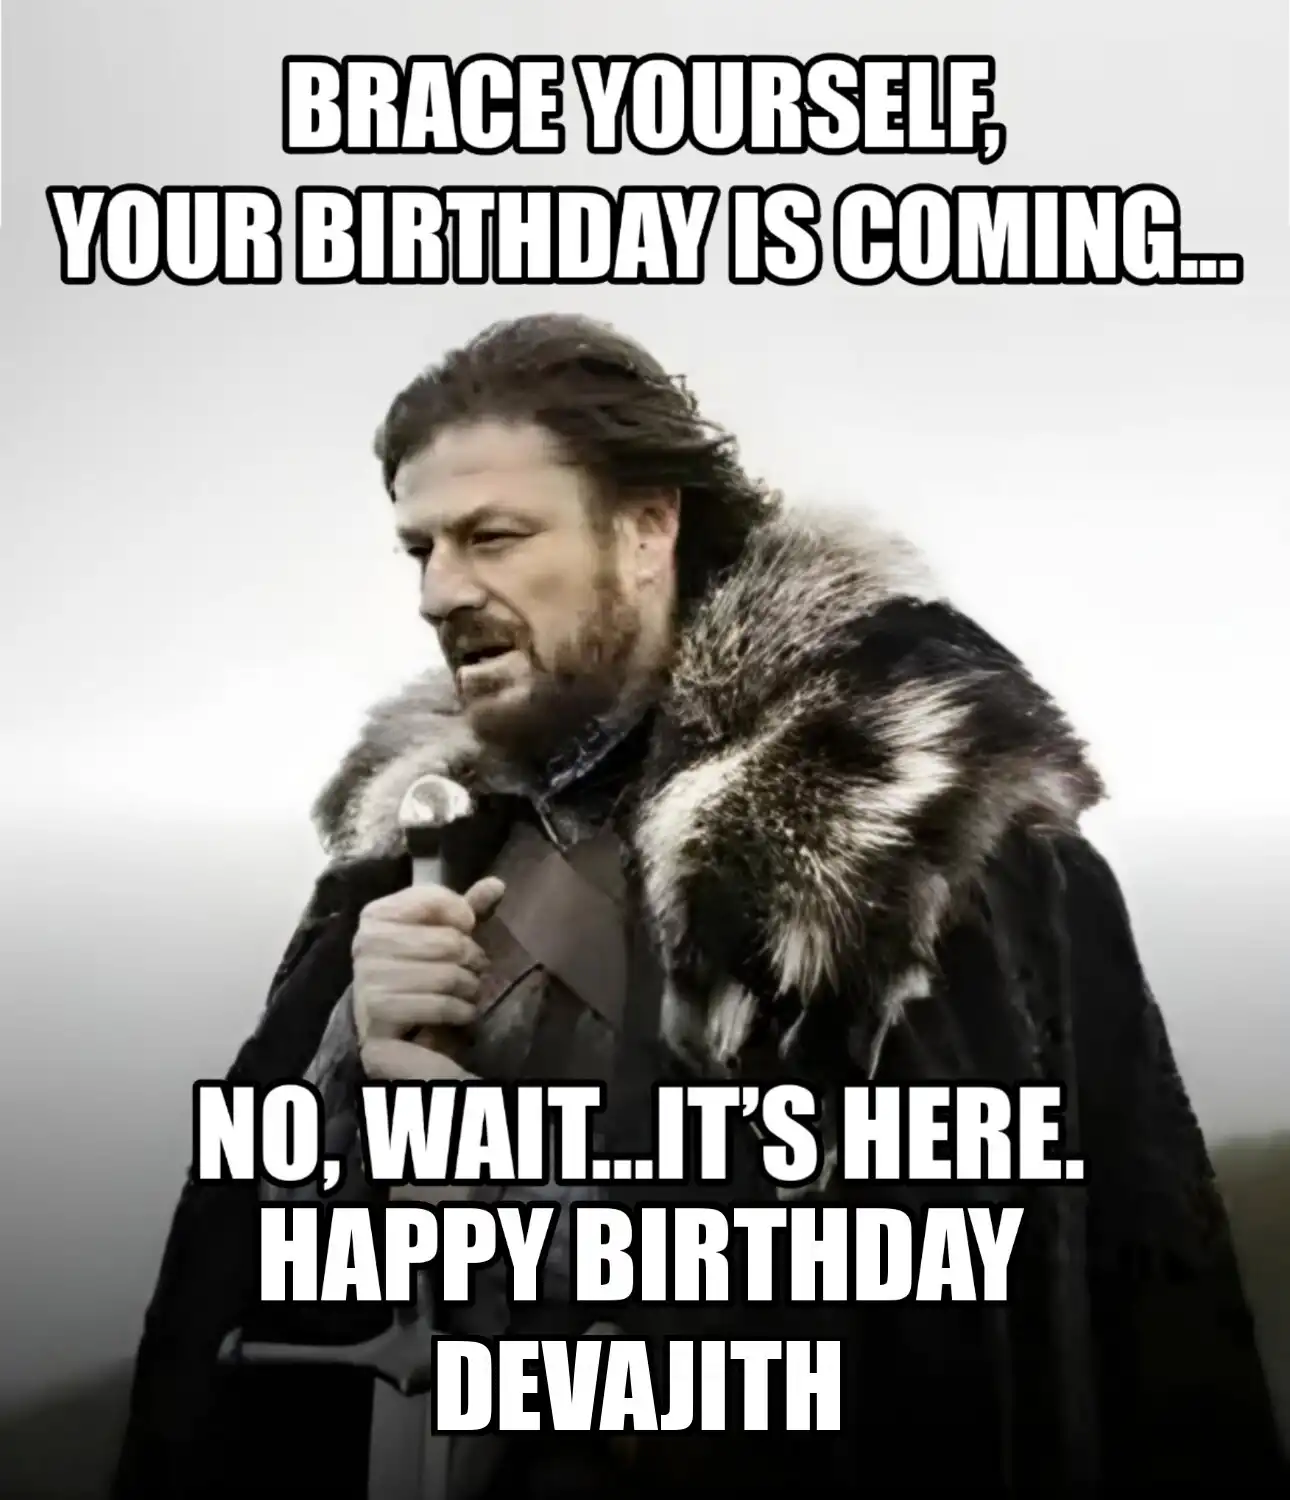 Happy Birthday Devajith Brace Yourself Your Birthday Is Coming Meme